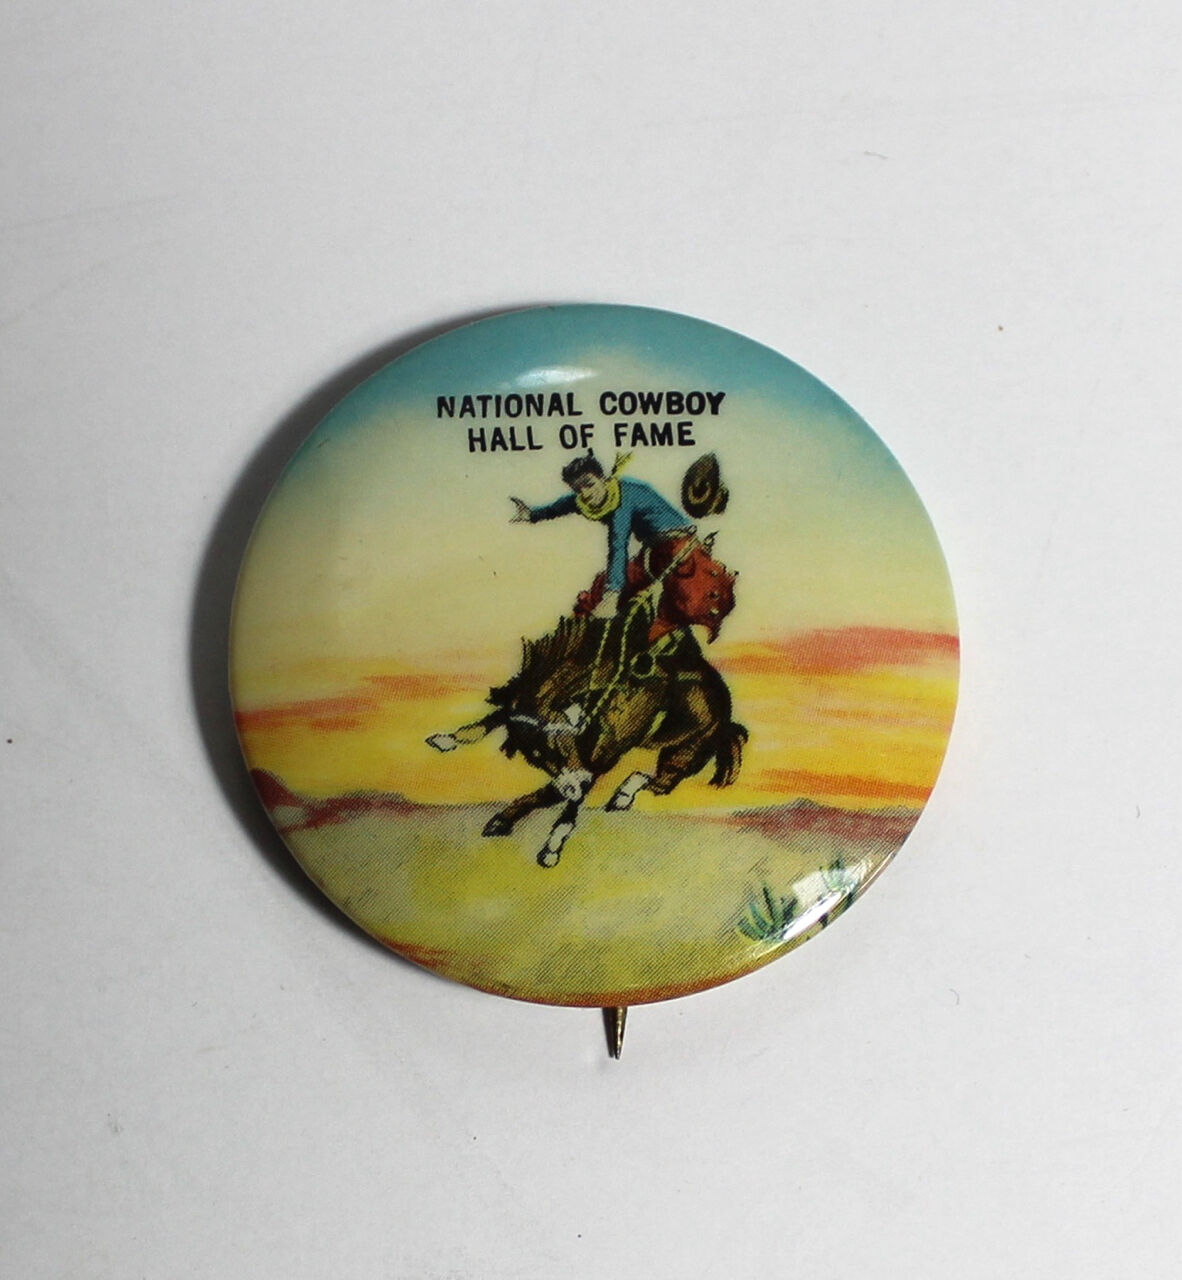 National Cowboy Hall Of Fame vintage advertising pin badge